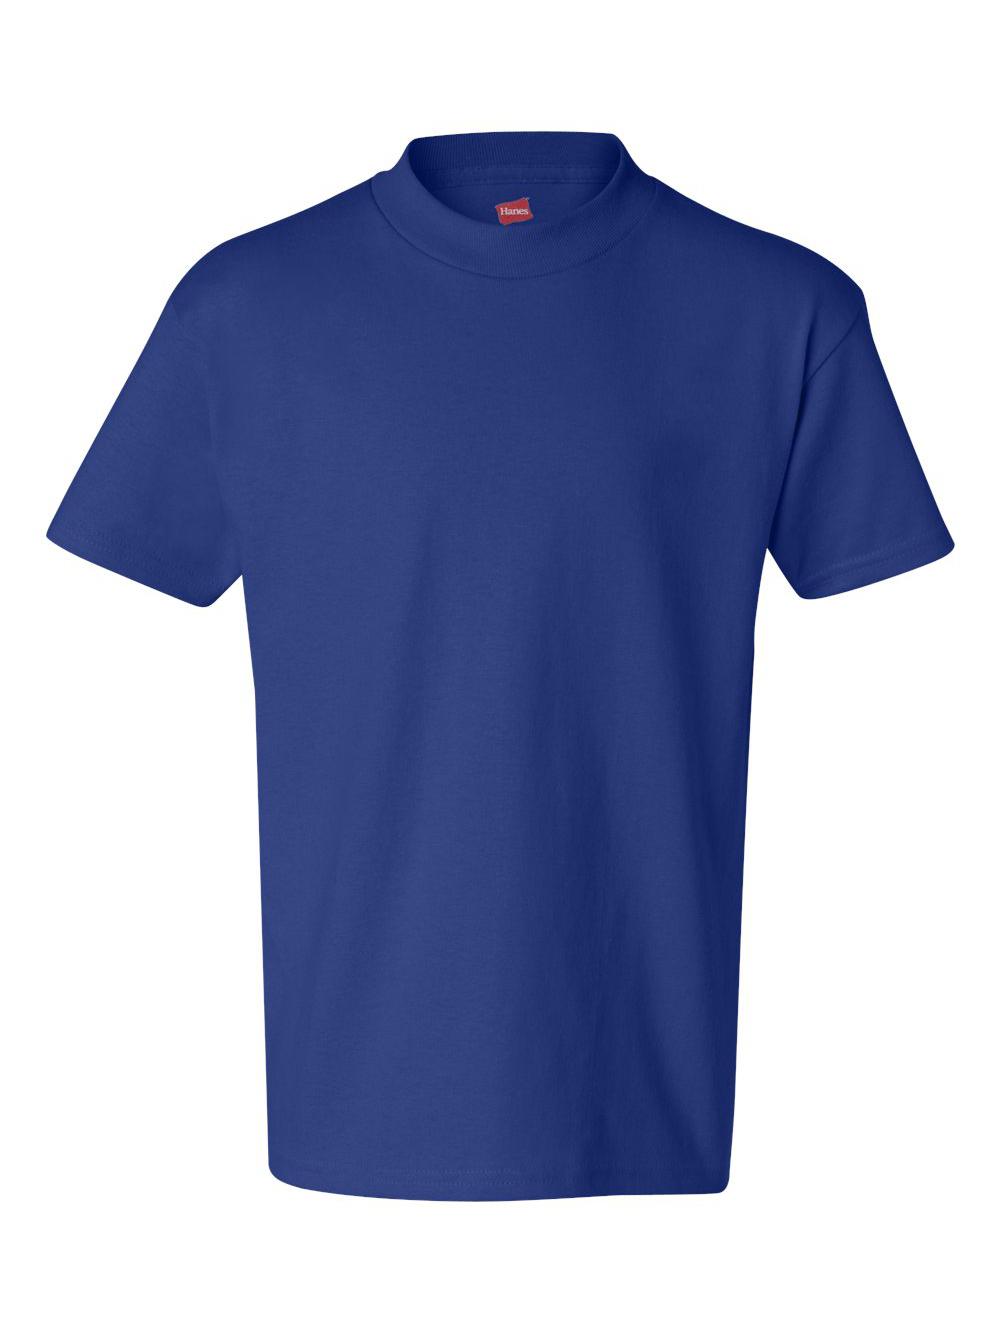 Boys' Tagless Short Sleeve T-Shirt - image 2 of 3